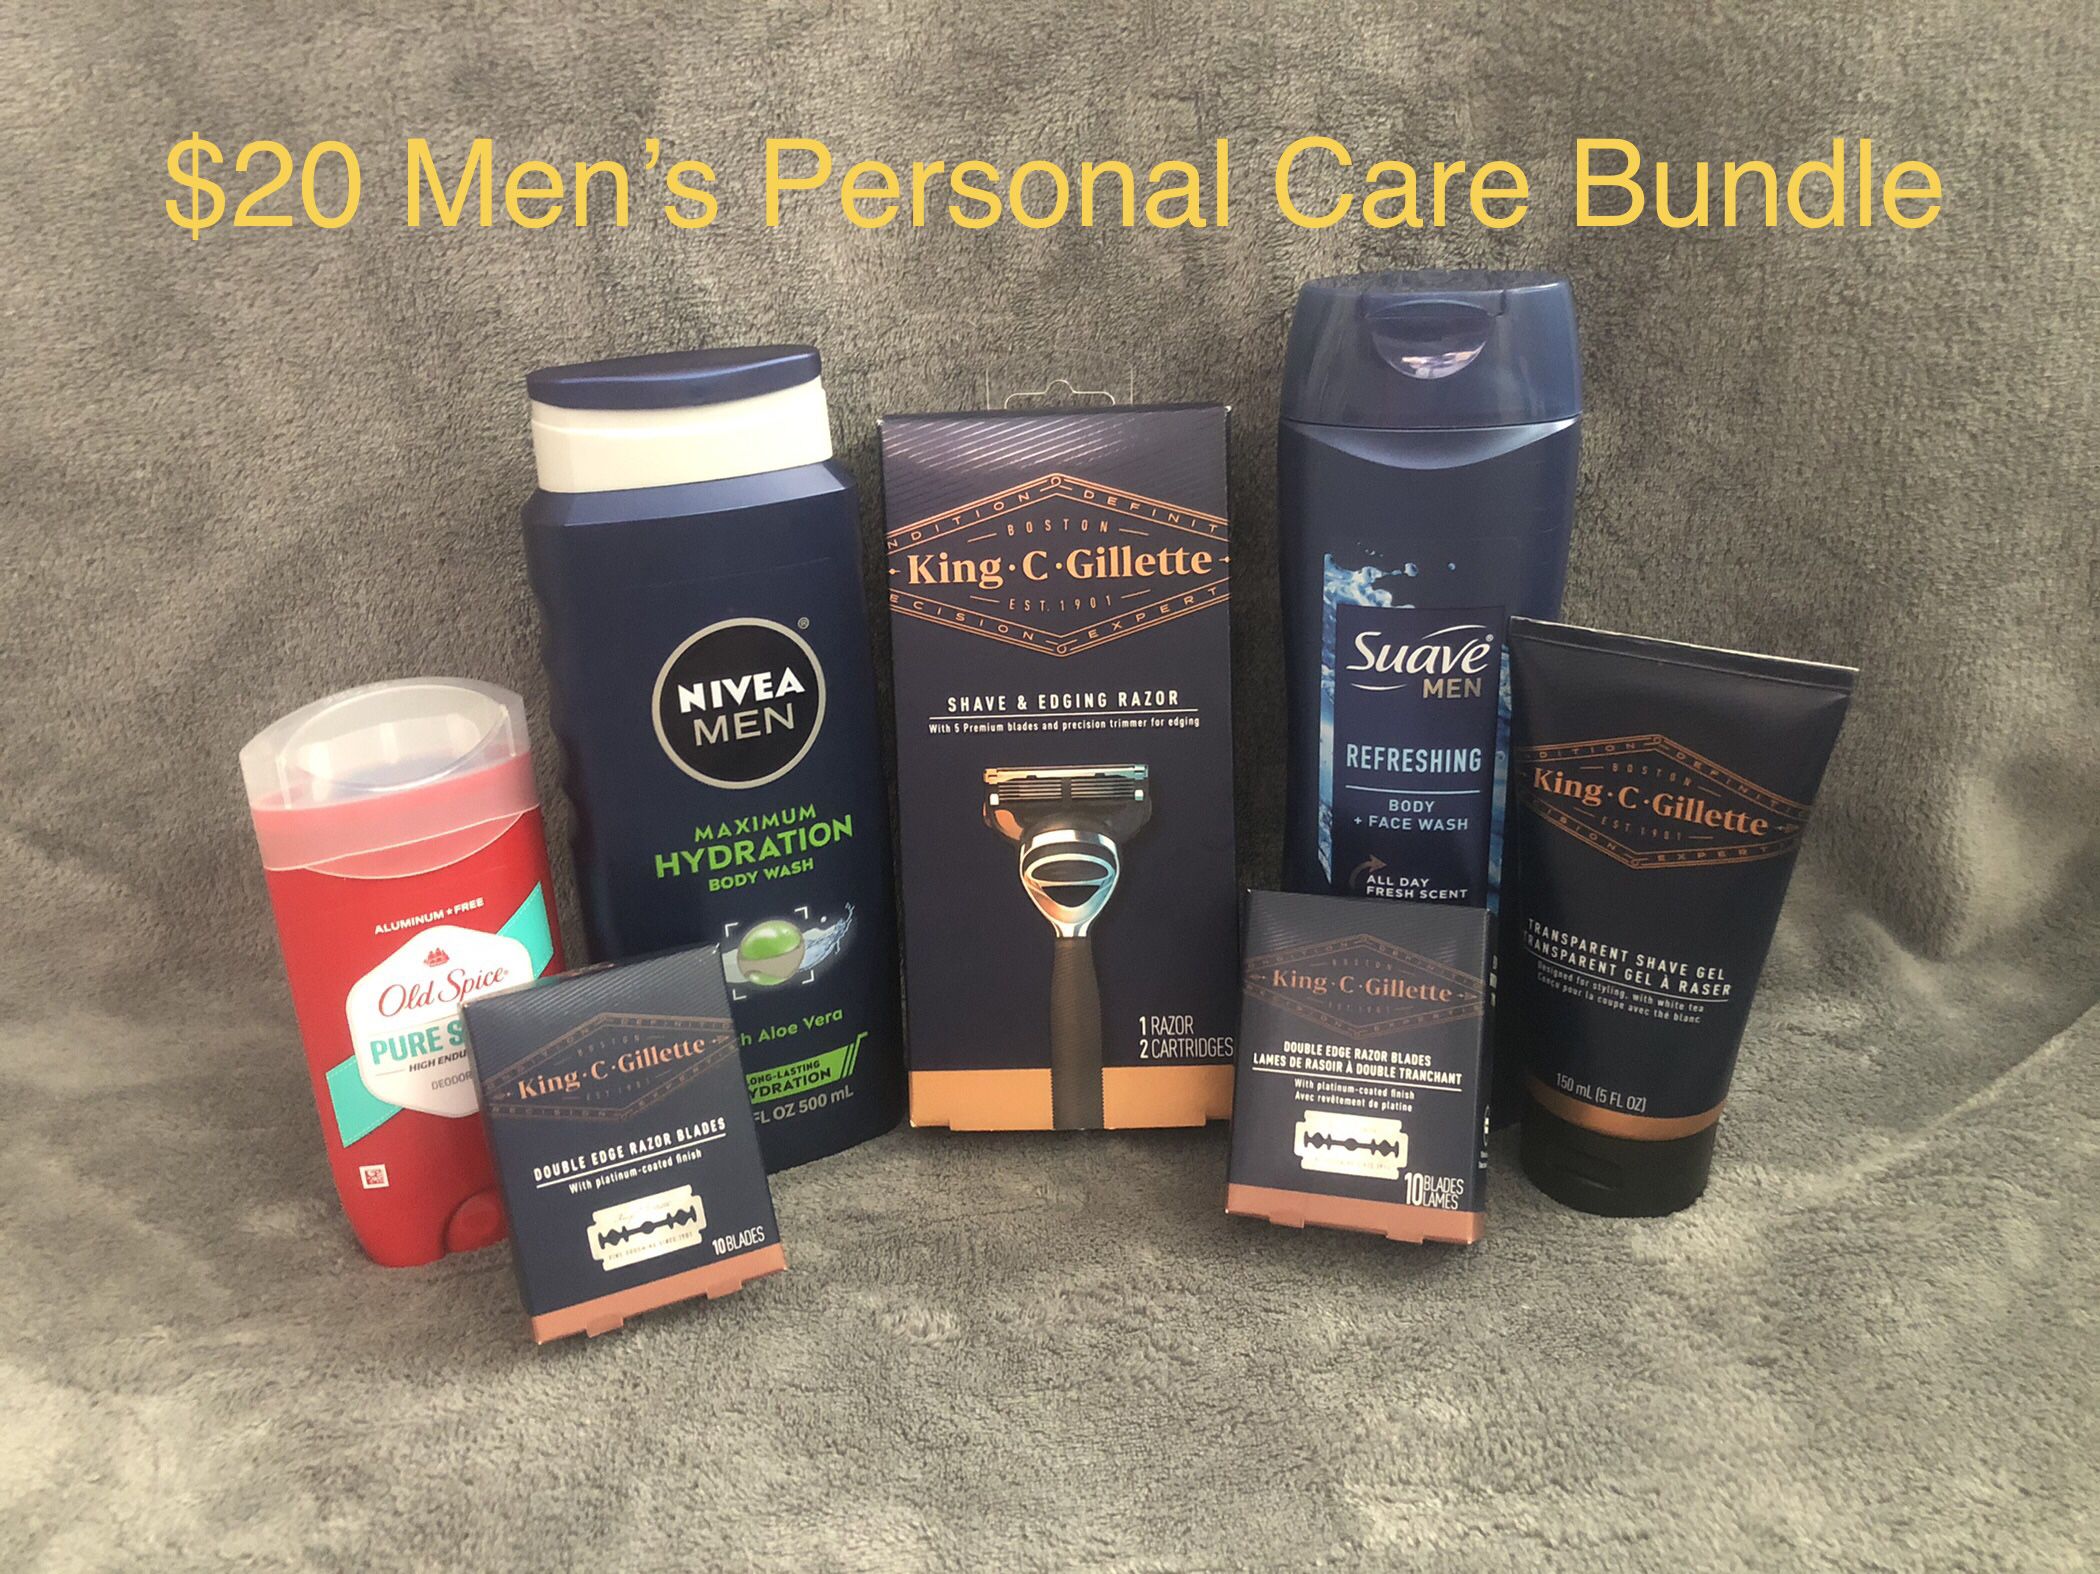 Men’s Shaving and Personal Hygiene Bundle